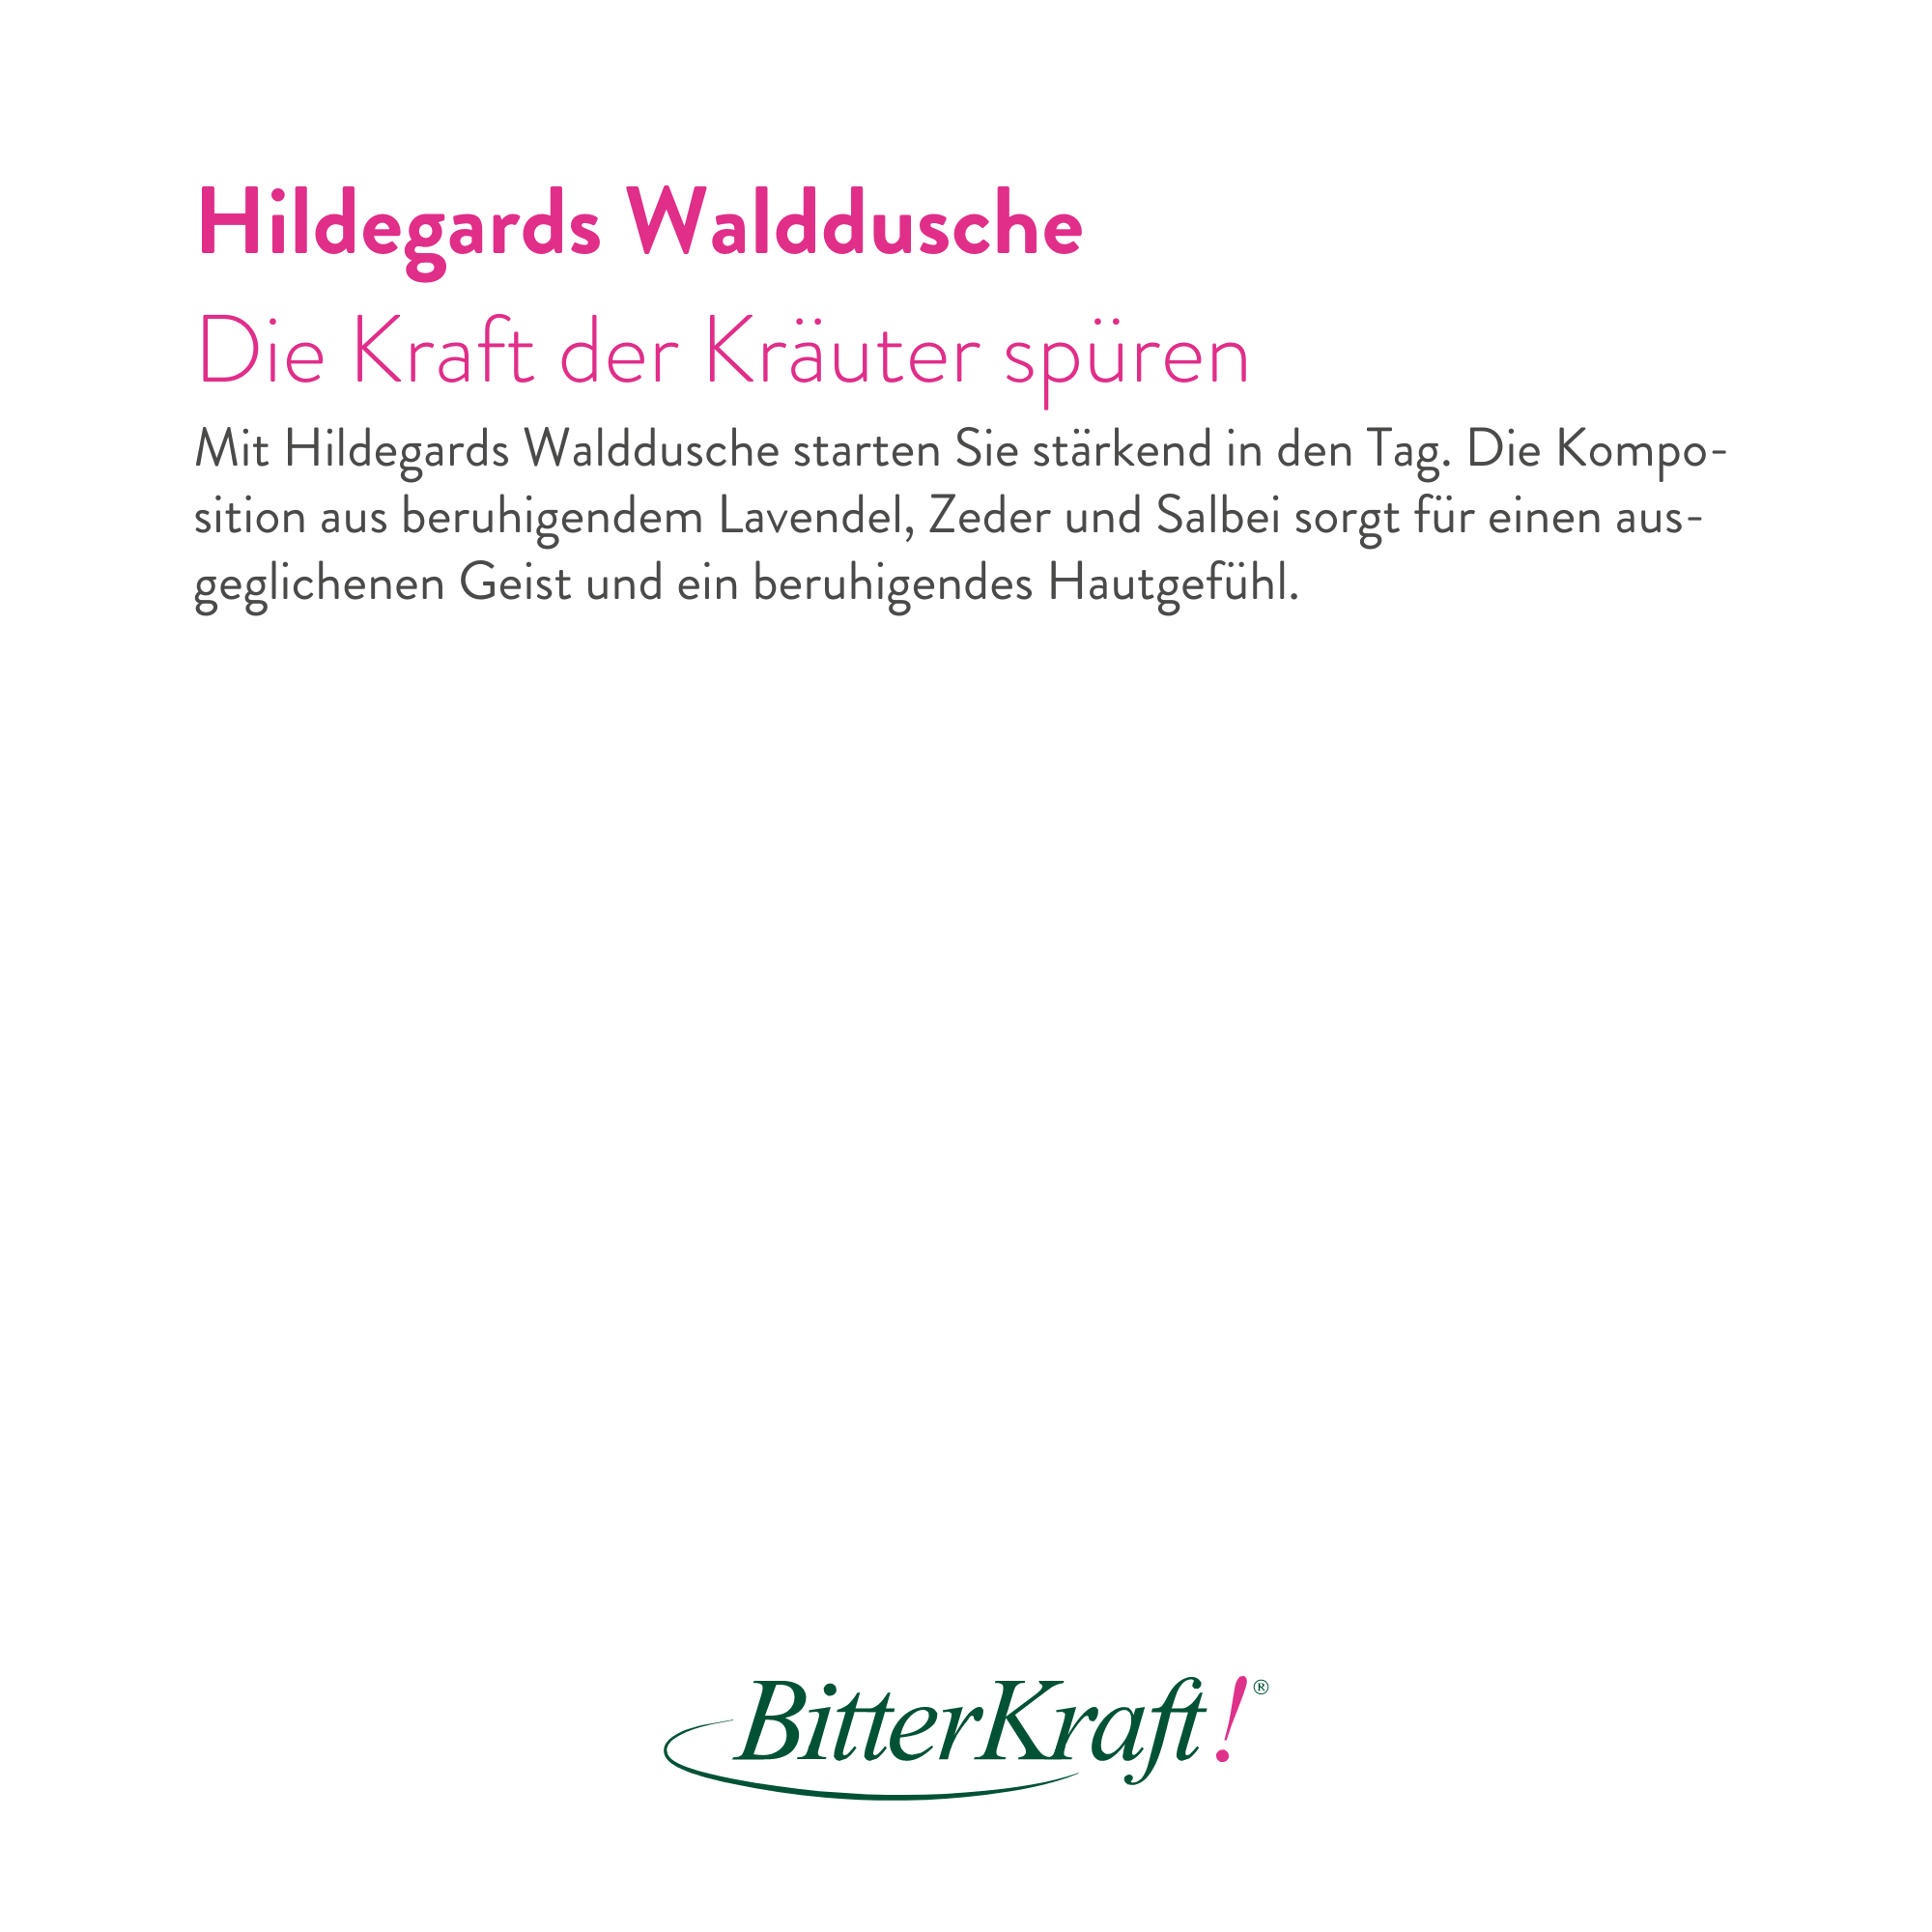 Hildegards Walddusche